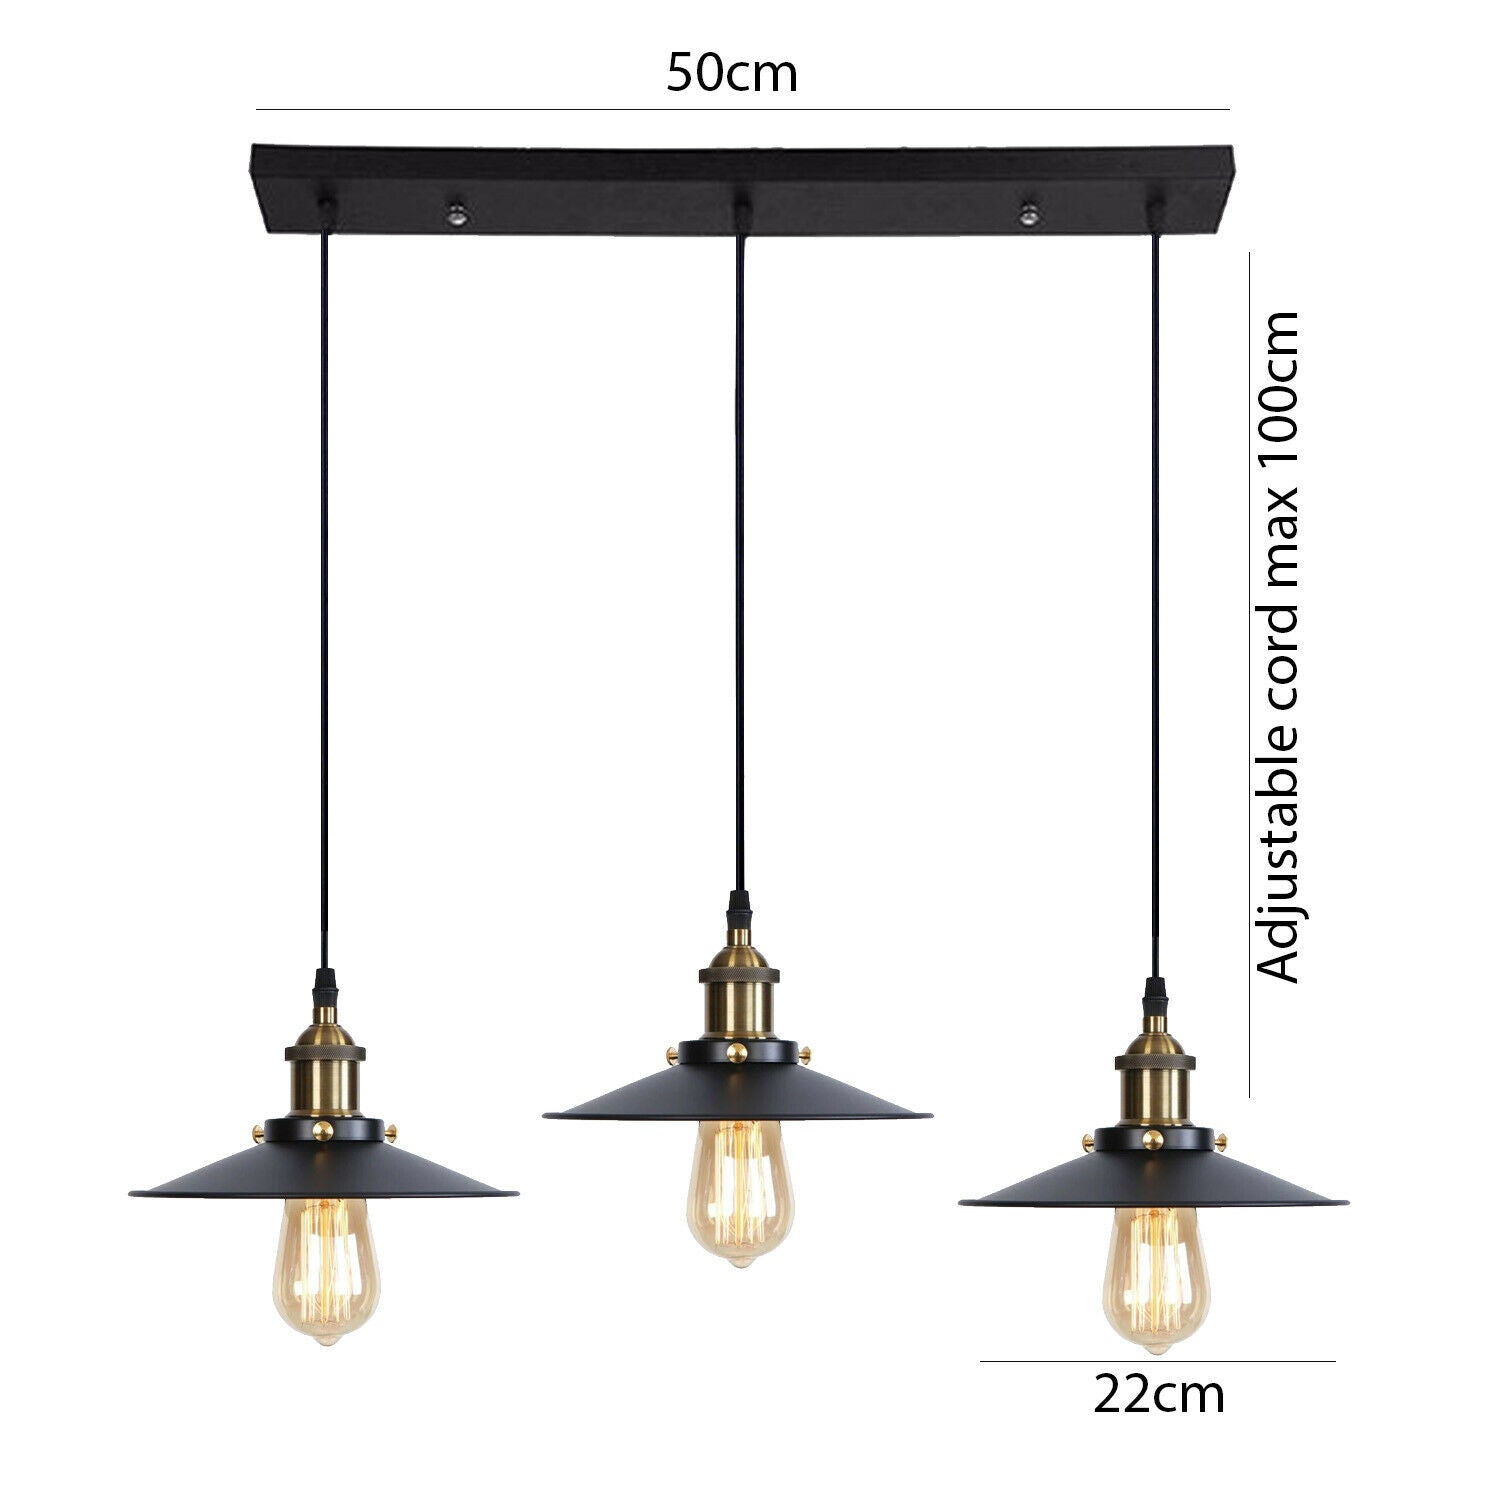 3 Way Modern Black Ceiling Pendant Cluster Light Fitting Industrial Pendant Lampshade~2137 - LEDSone UK Ltd